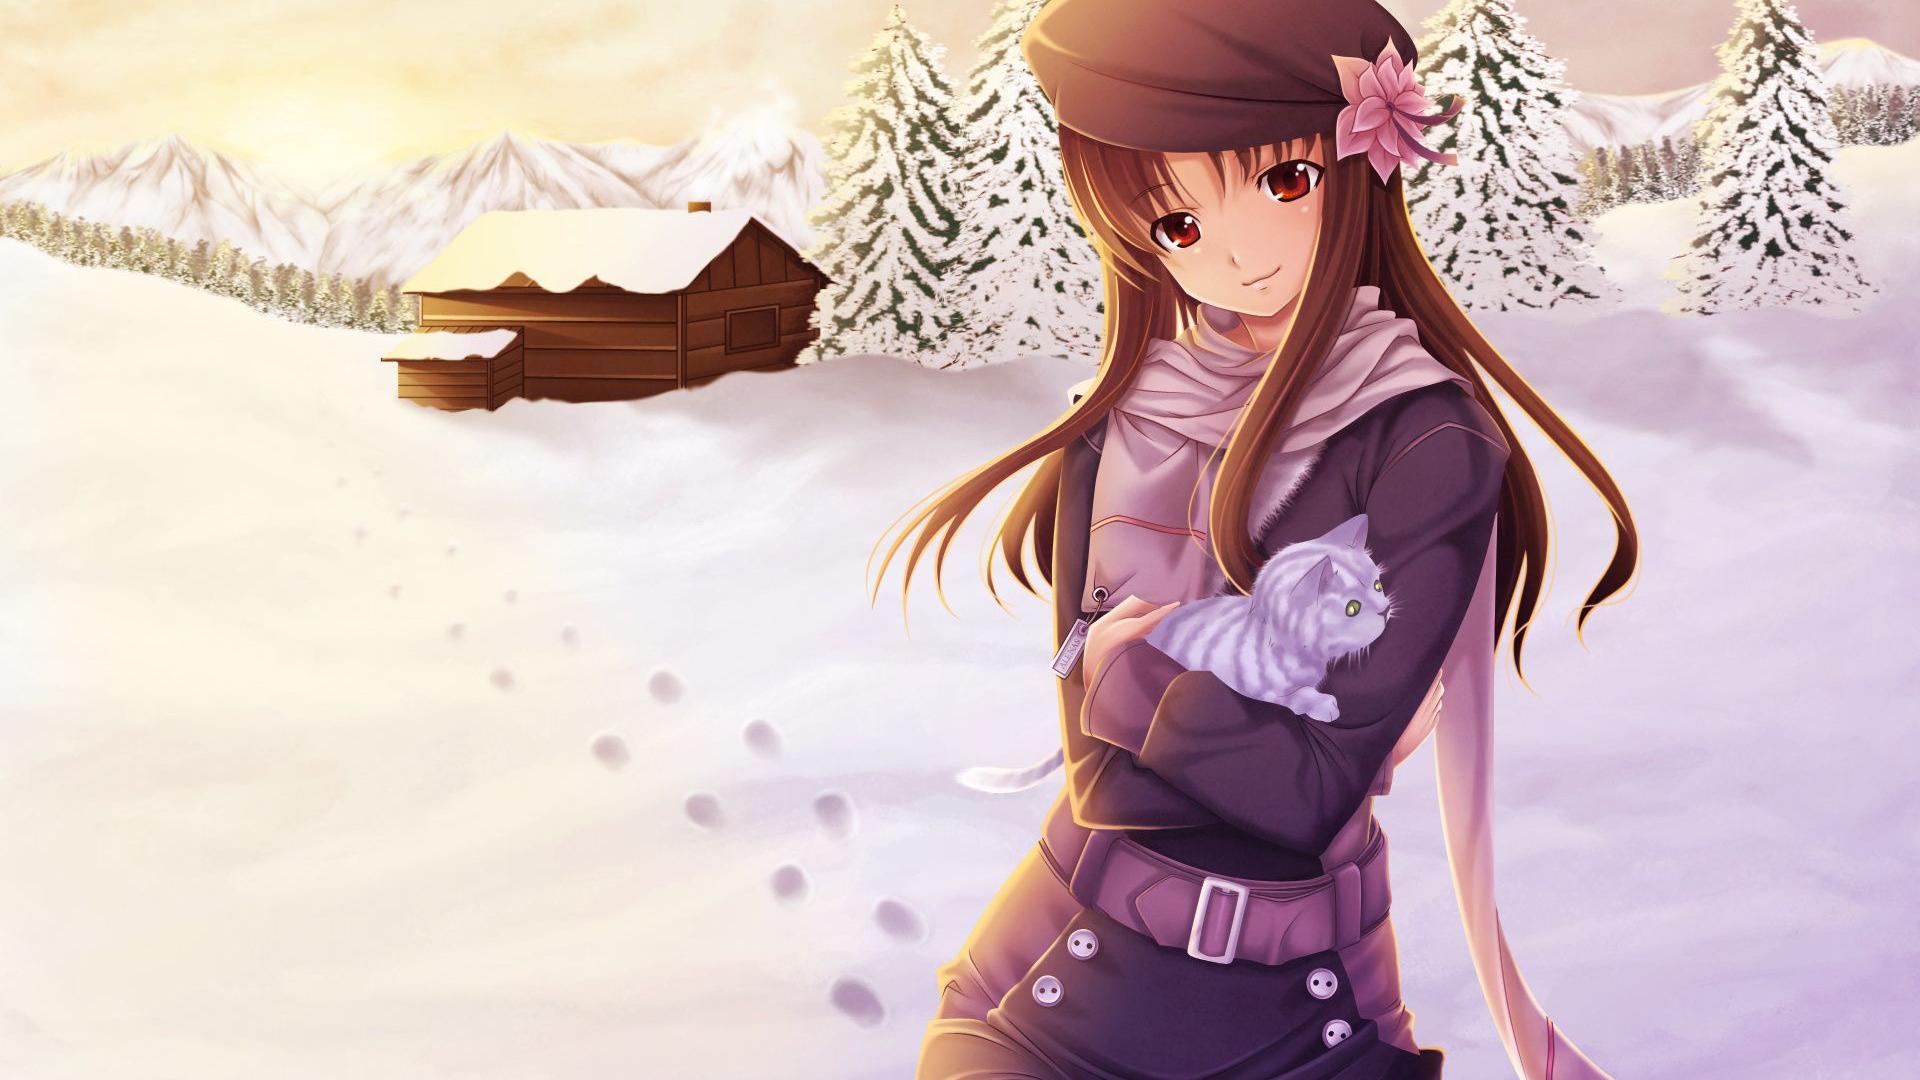 Wallpapers Korean Girl Anime Cute Sweet Winter Snow Hd 184012.8 ...